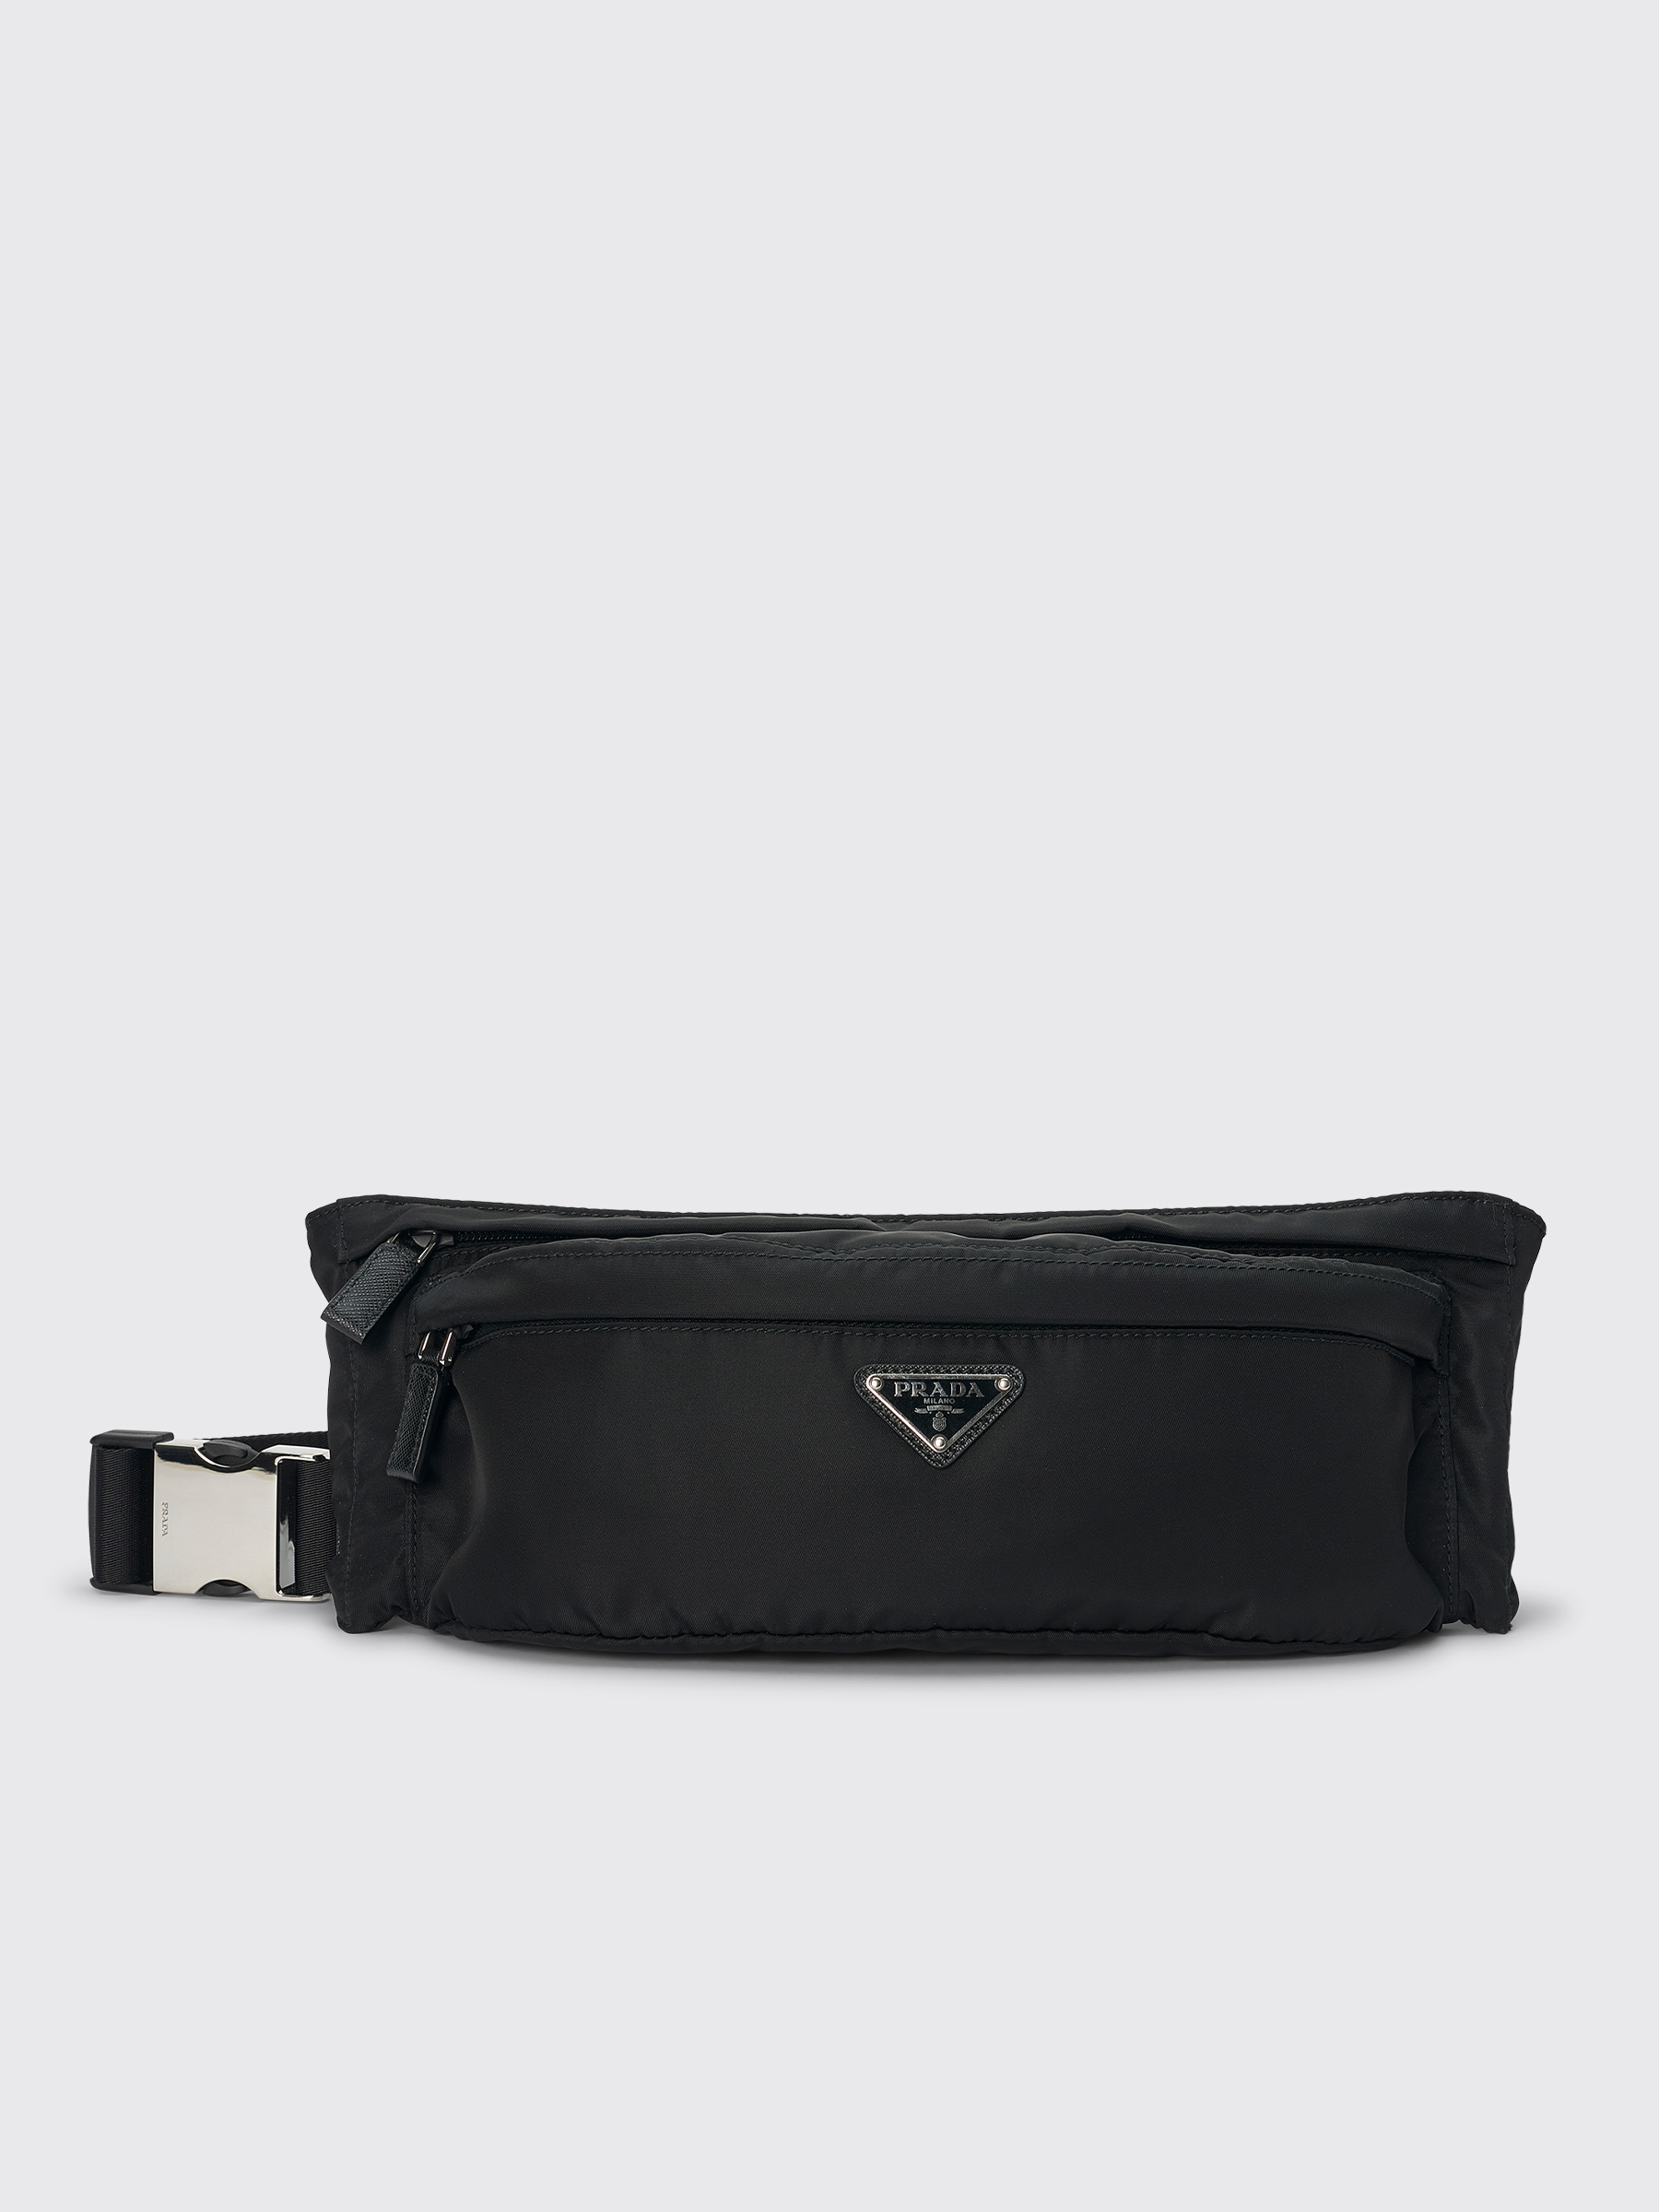 prada saffiano leather belt bag